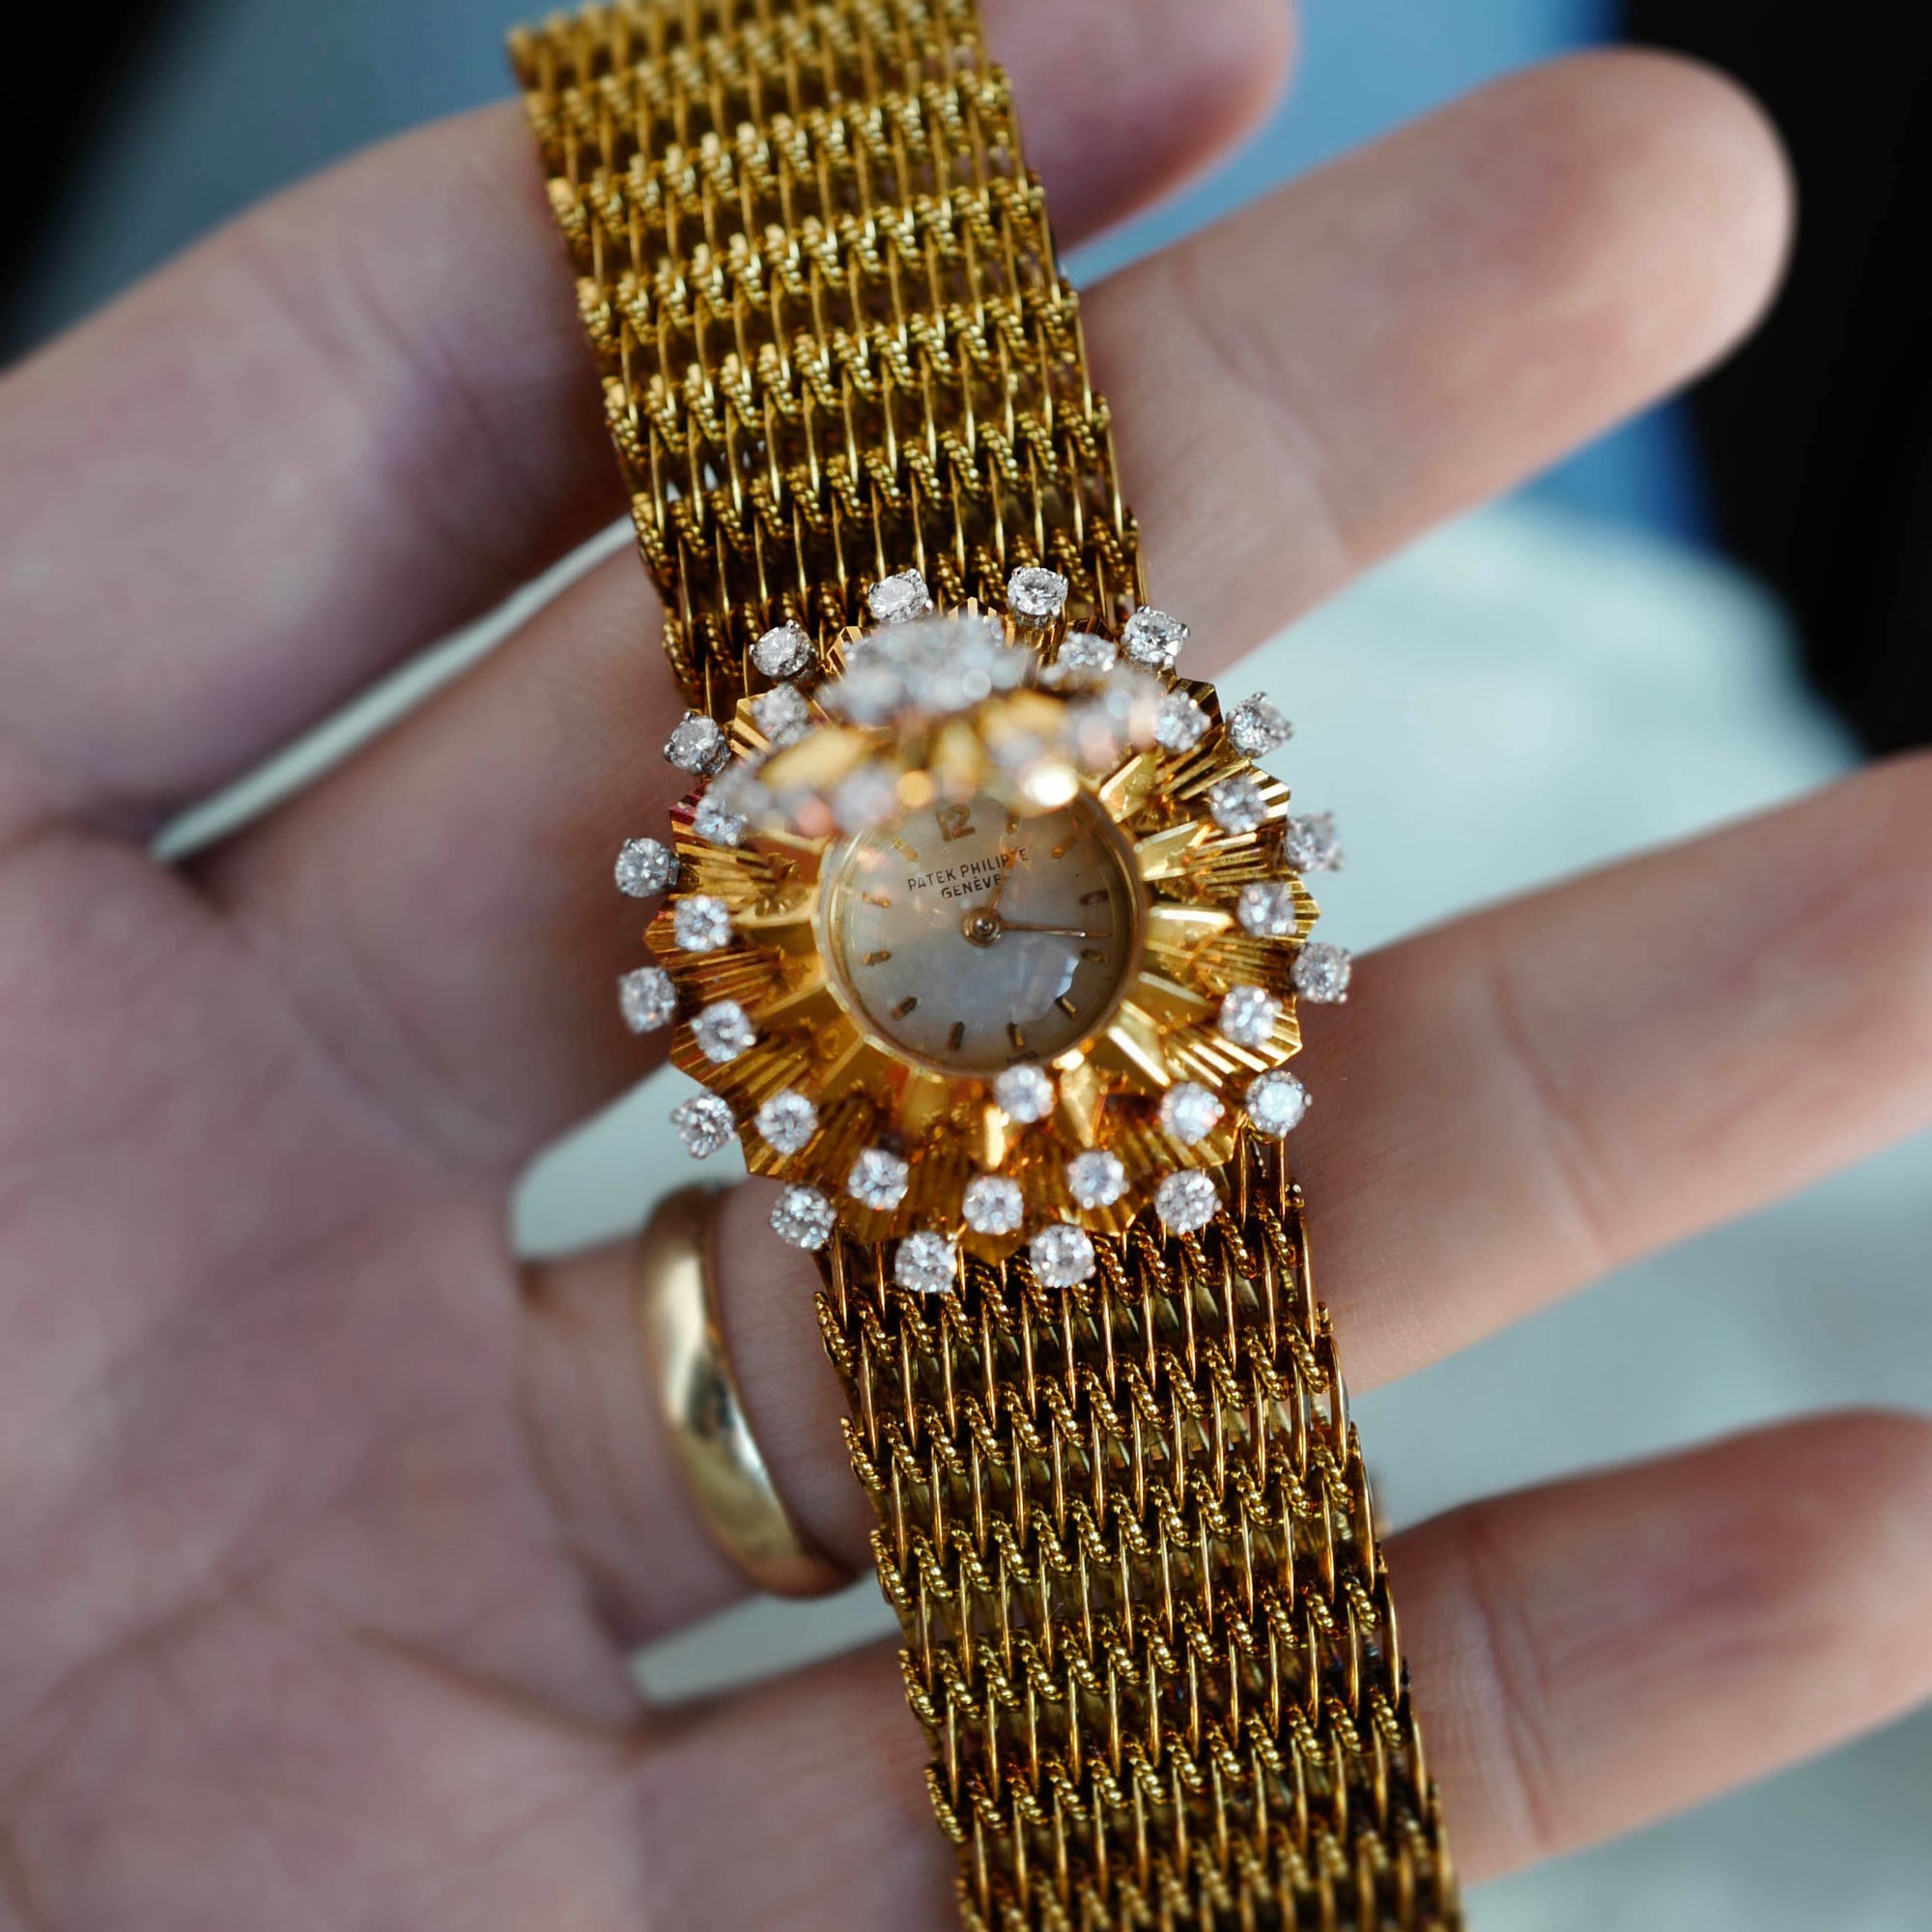 Patek Philippe - Patek Philippe Diamond Cover Watch Ref. 3006 (NEW ARRIVAL) - The Keystone Watches